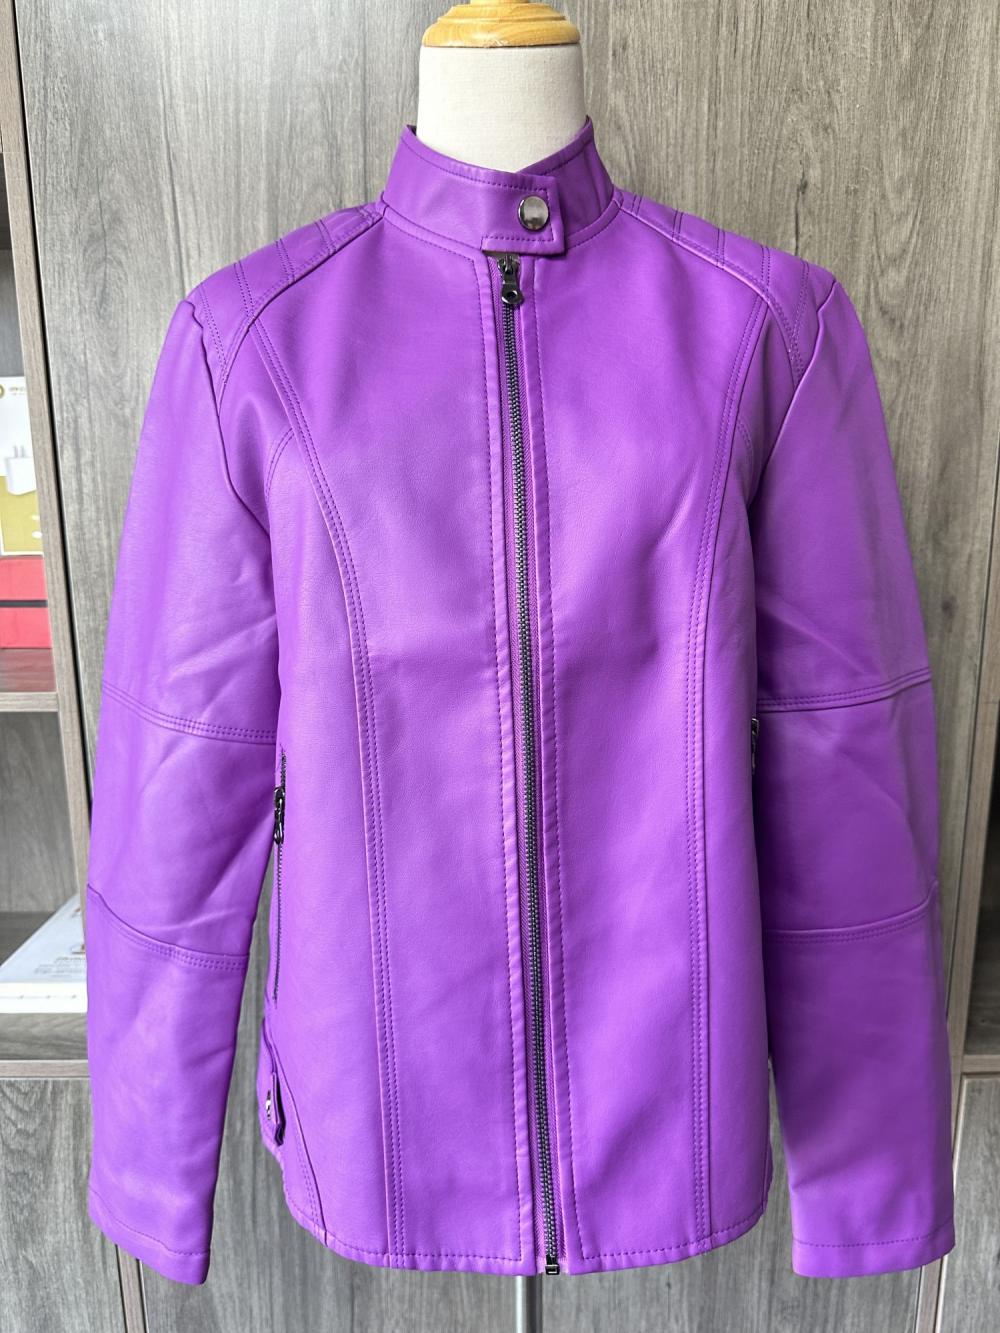 Custom women's leather jacket